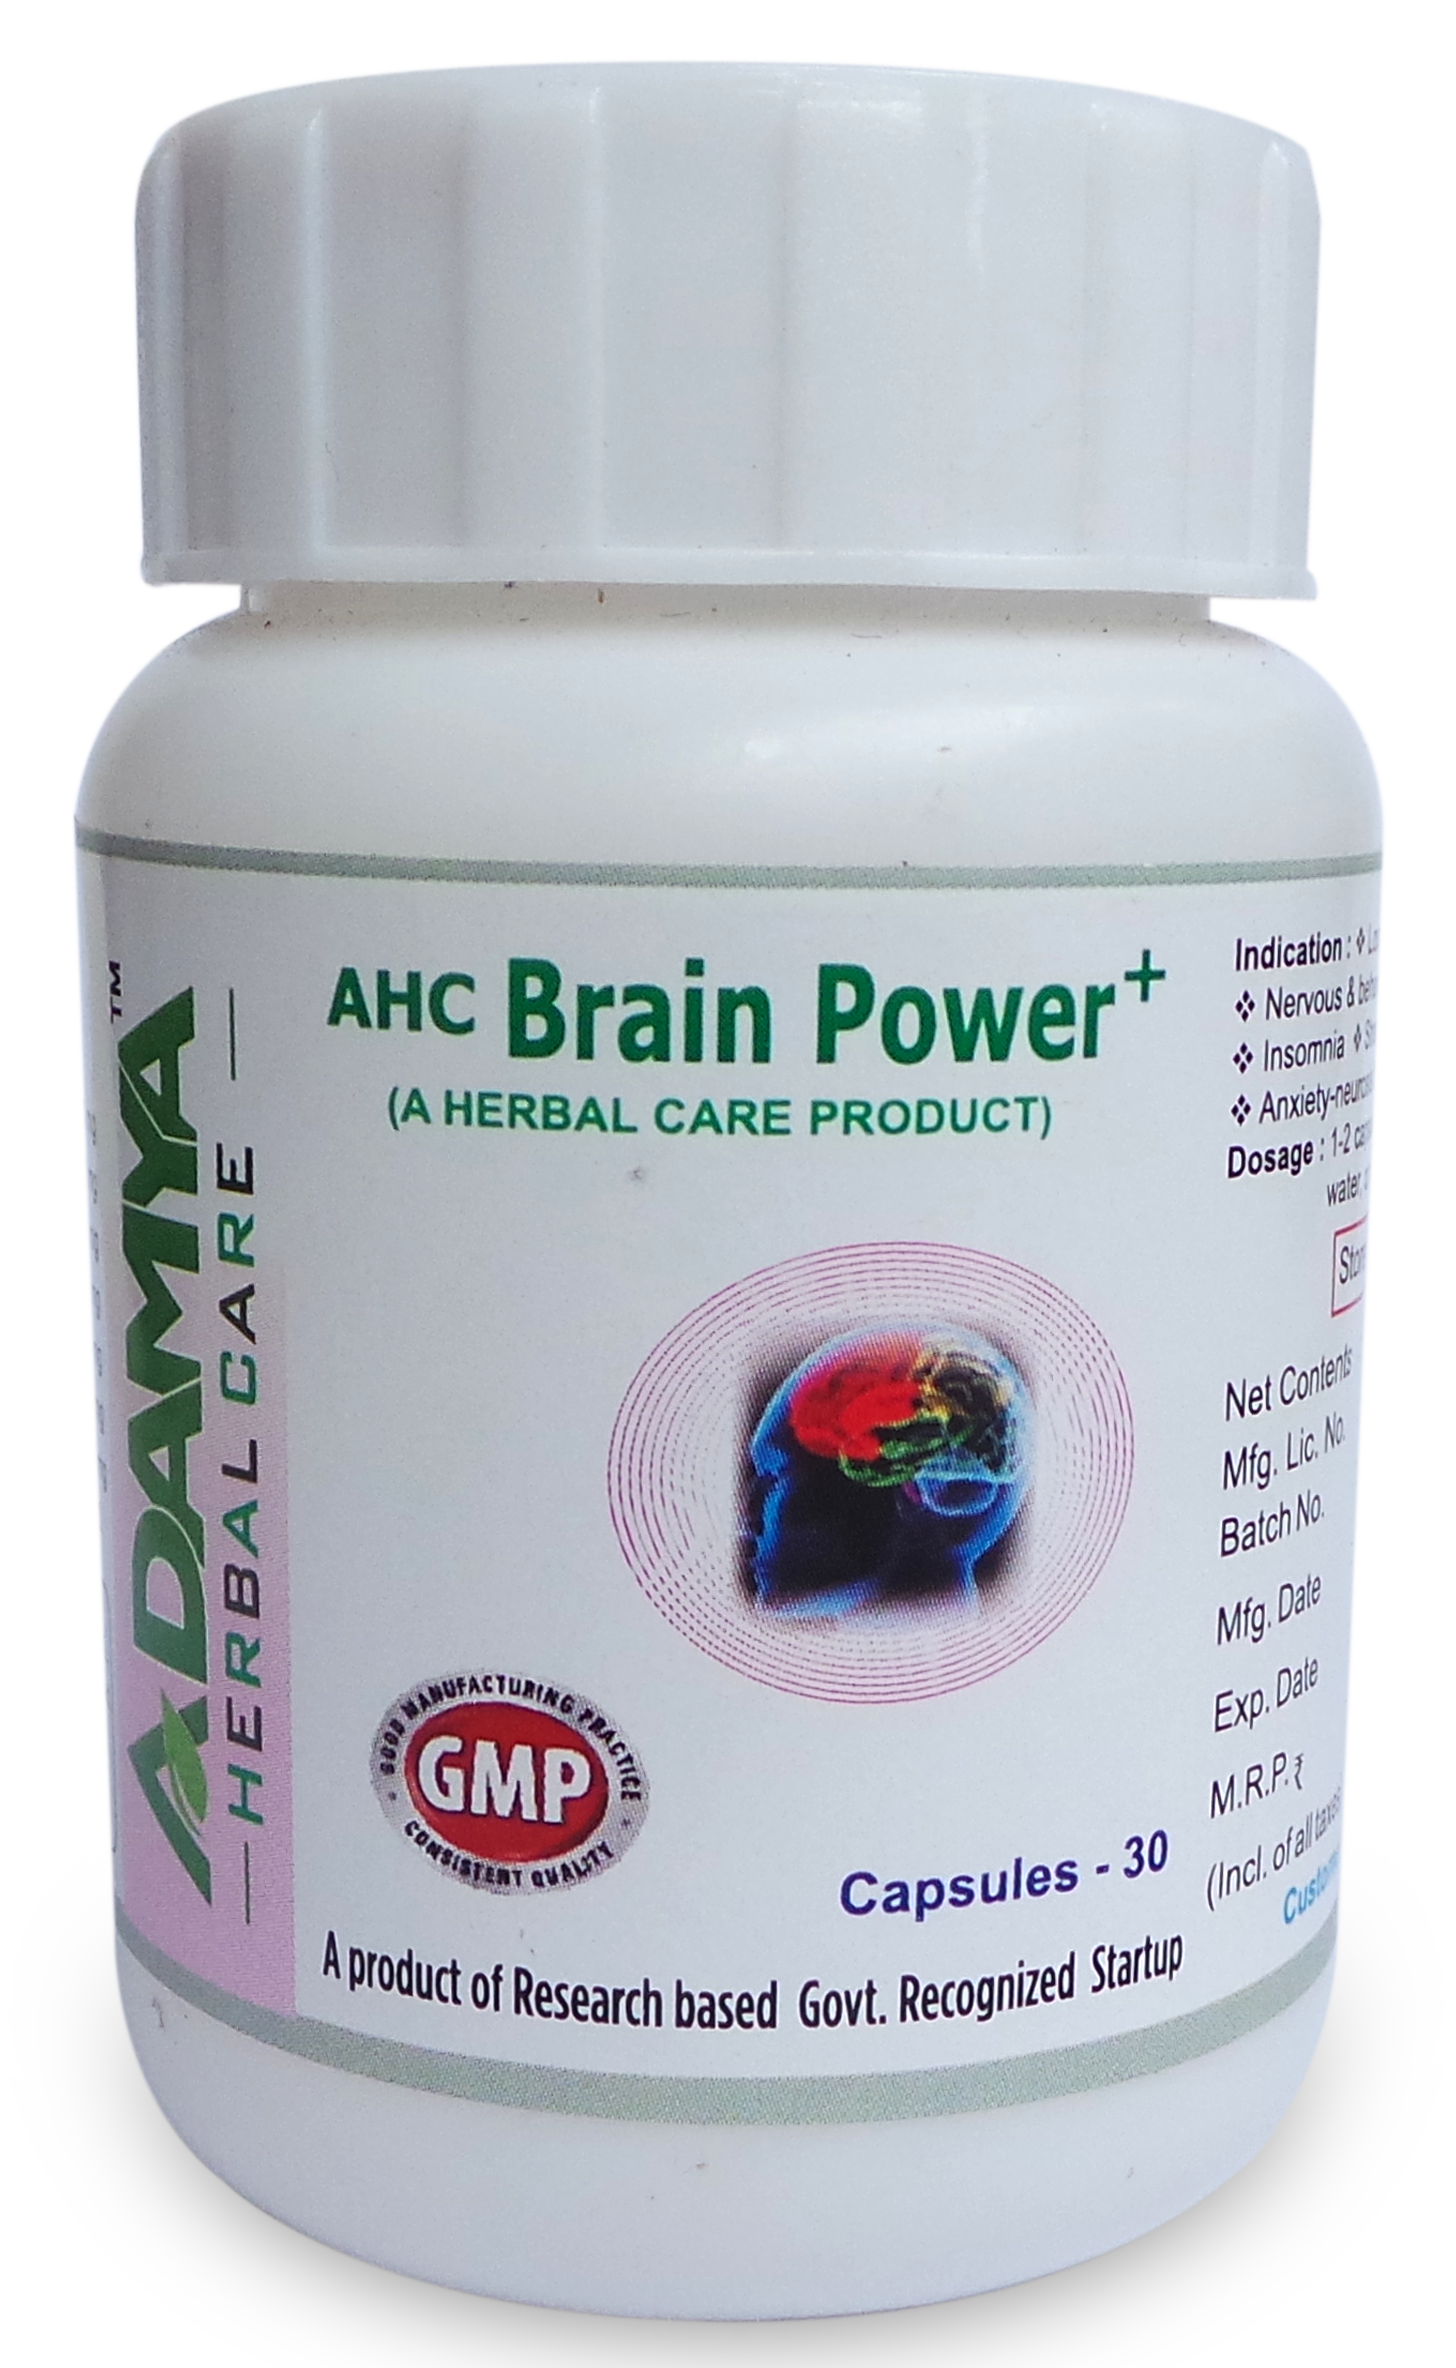 Buy AHC Brain Power at Best Price Online